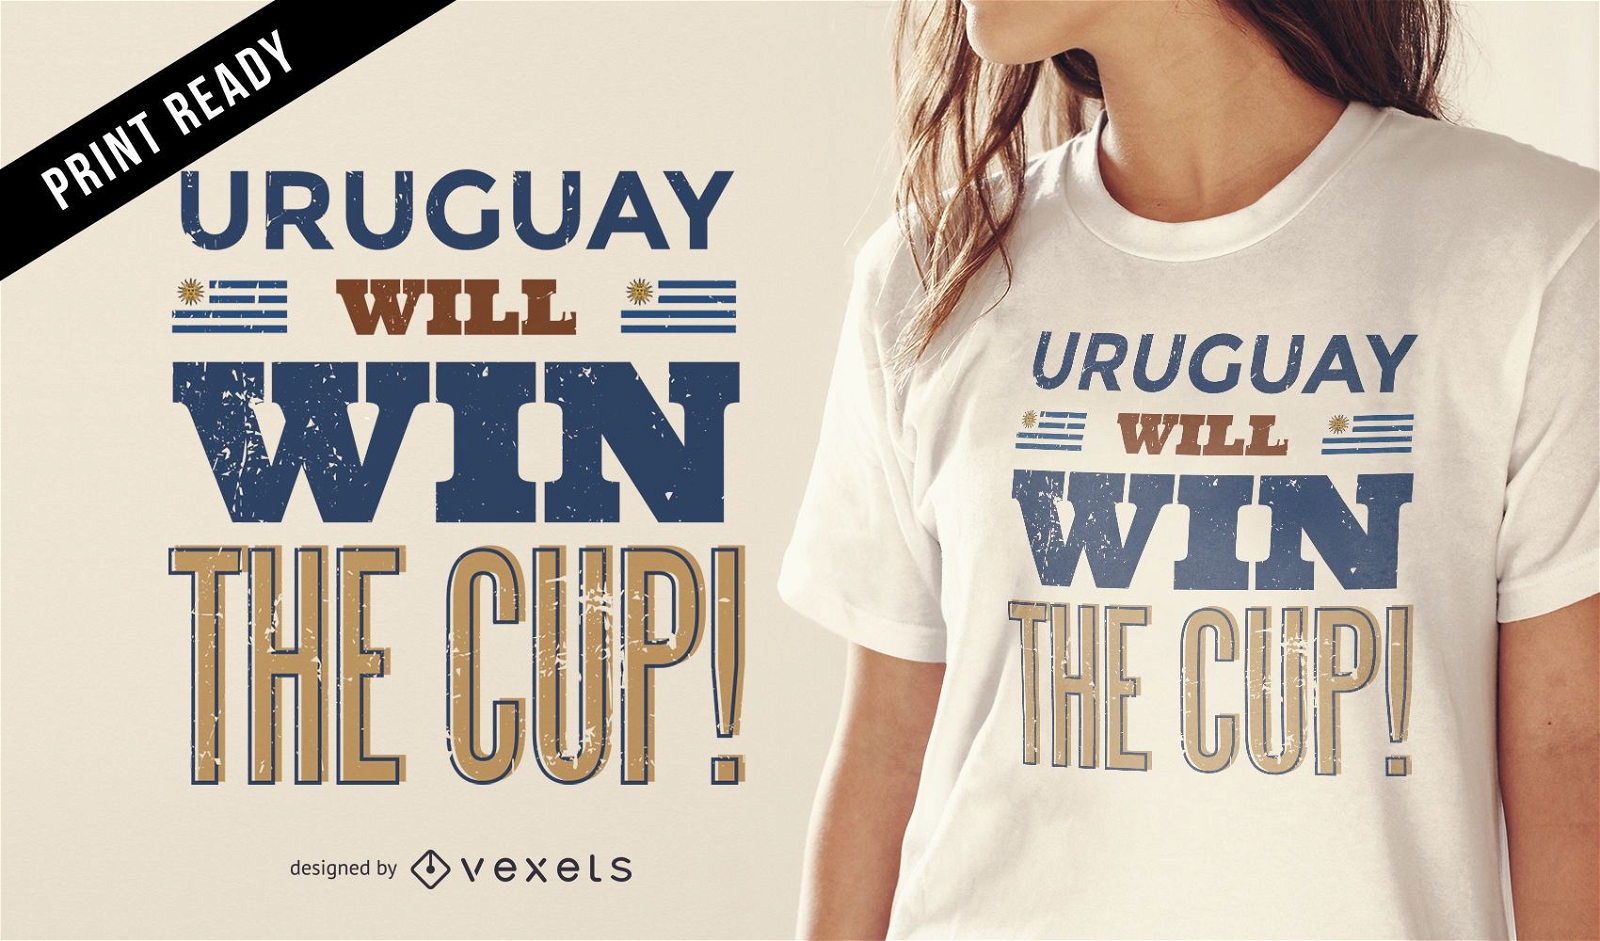 Uruguay ganar? dise?o de camiseta